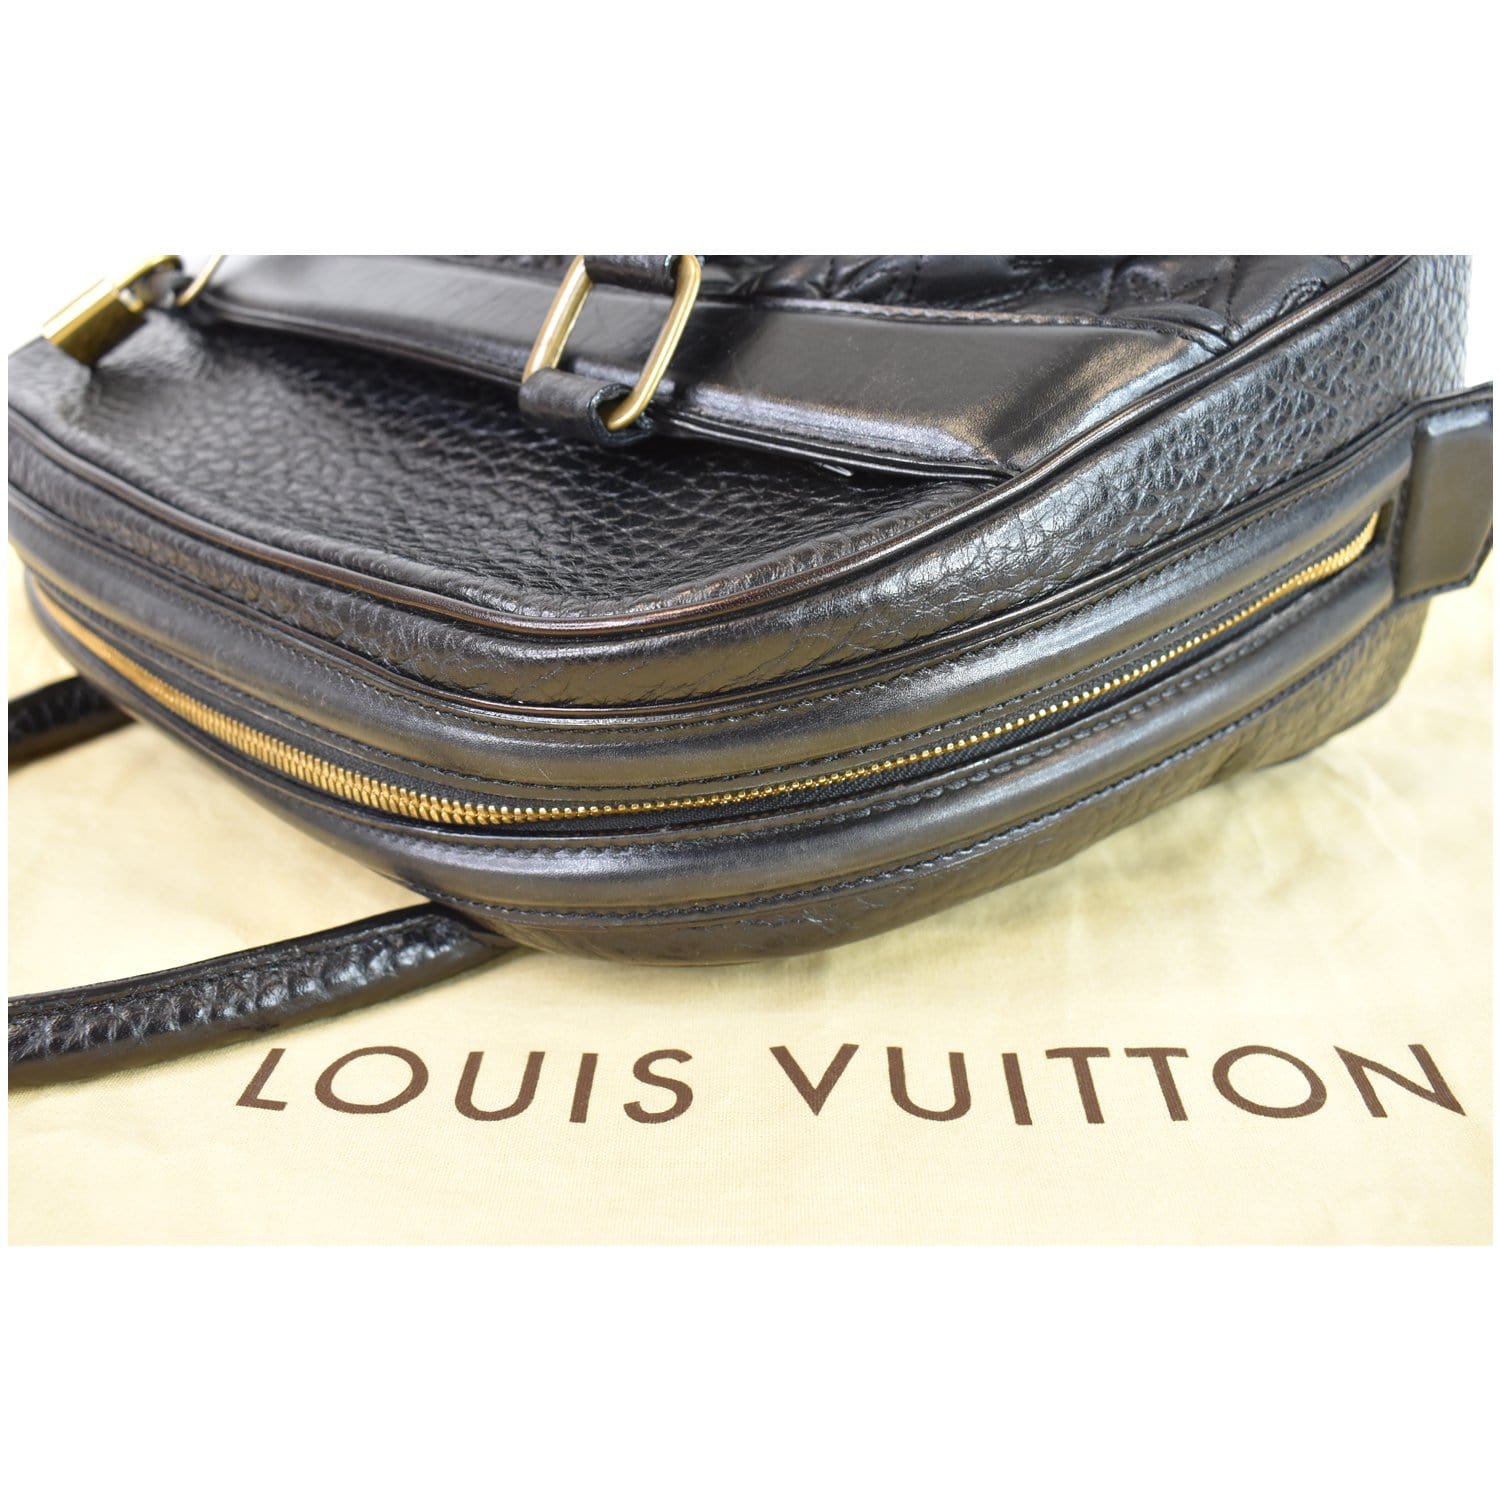 LOUIS VUITTON Limited Edition Mizi Vienna Bag 